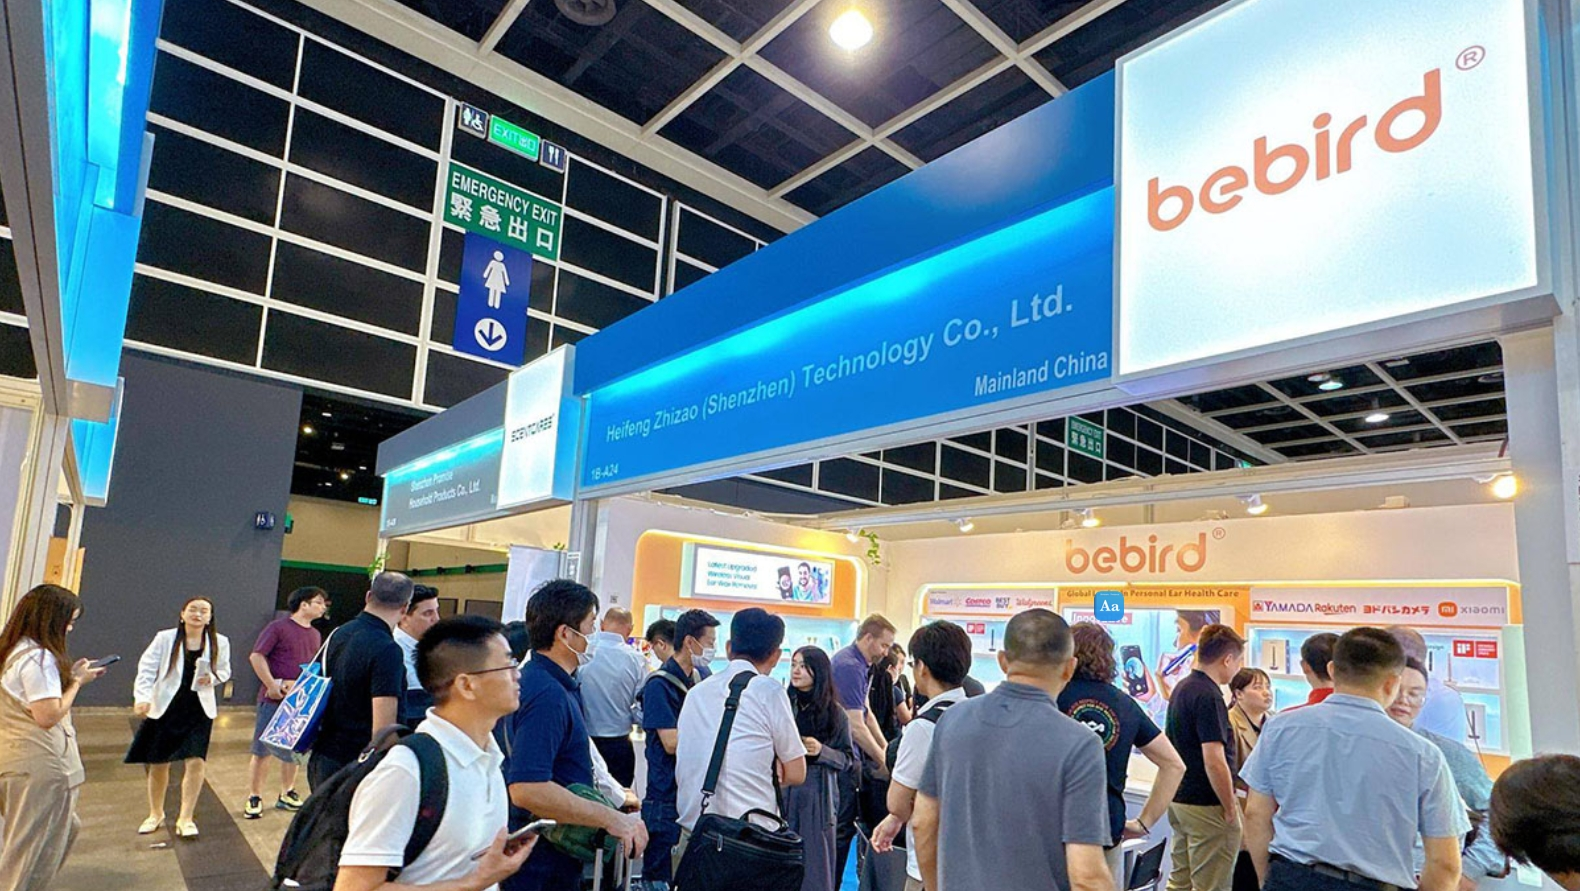 Bebird Note 5 shines at HK Fair 